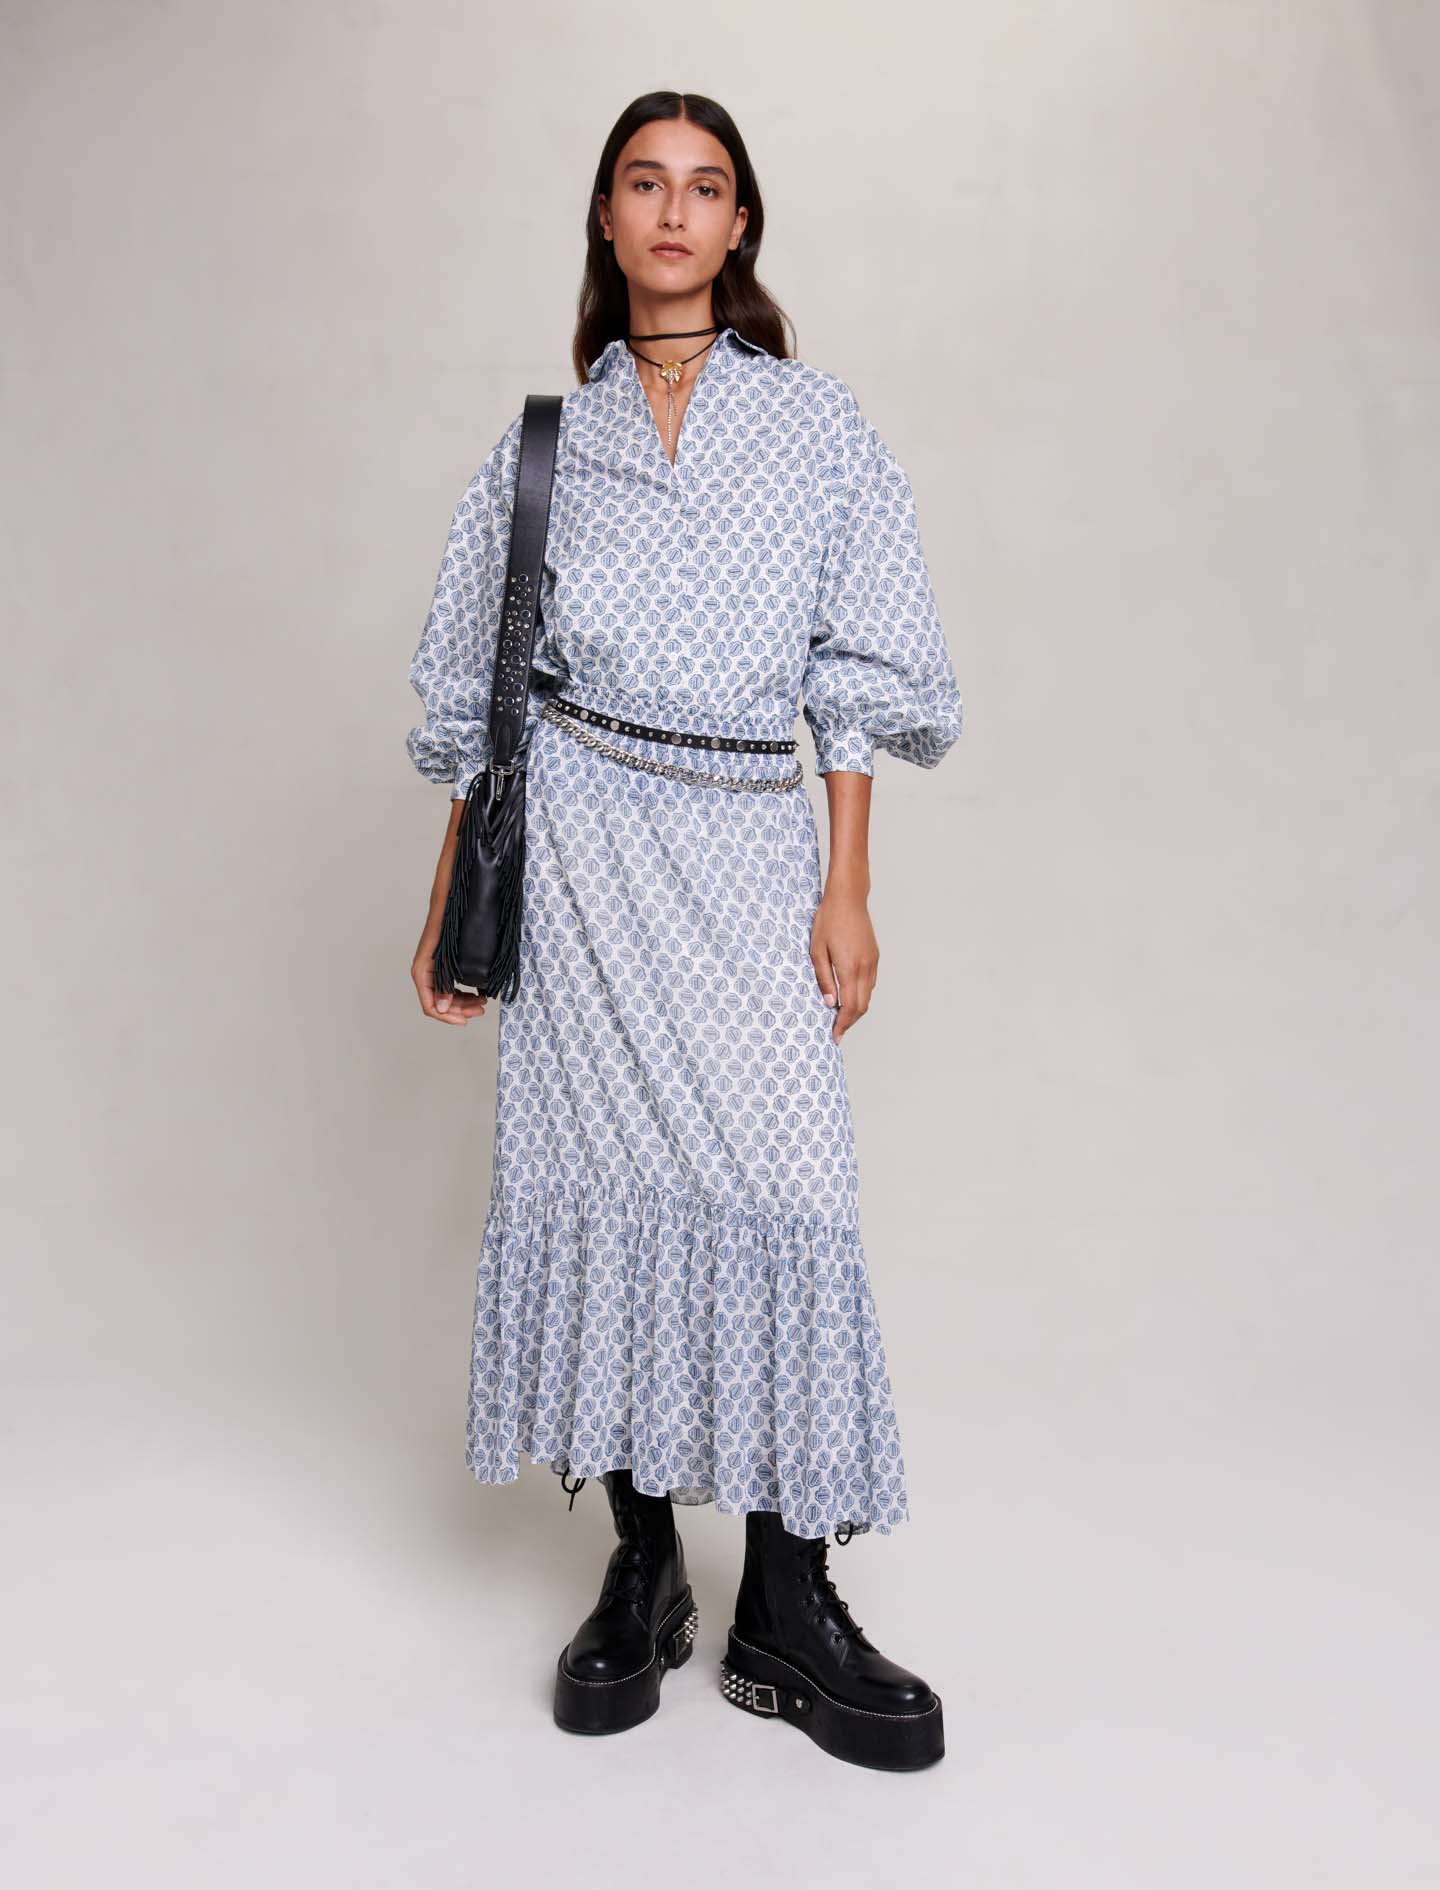 Maje Woman's polyester Long asymmetric skirt for Fall/Winter, in color Clover monogram ecru/blue /